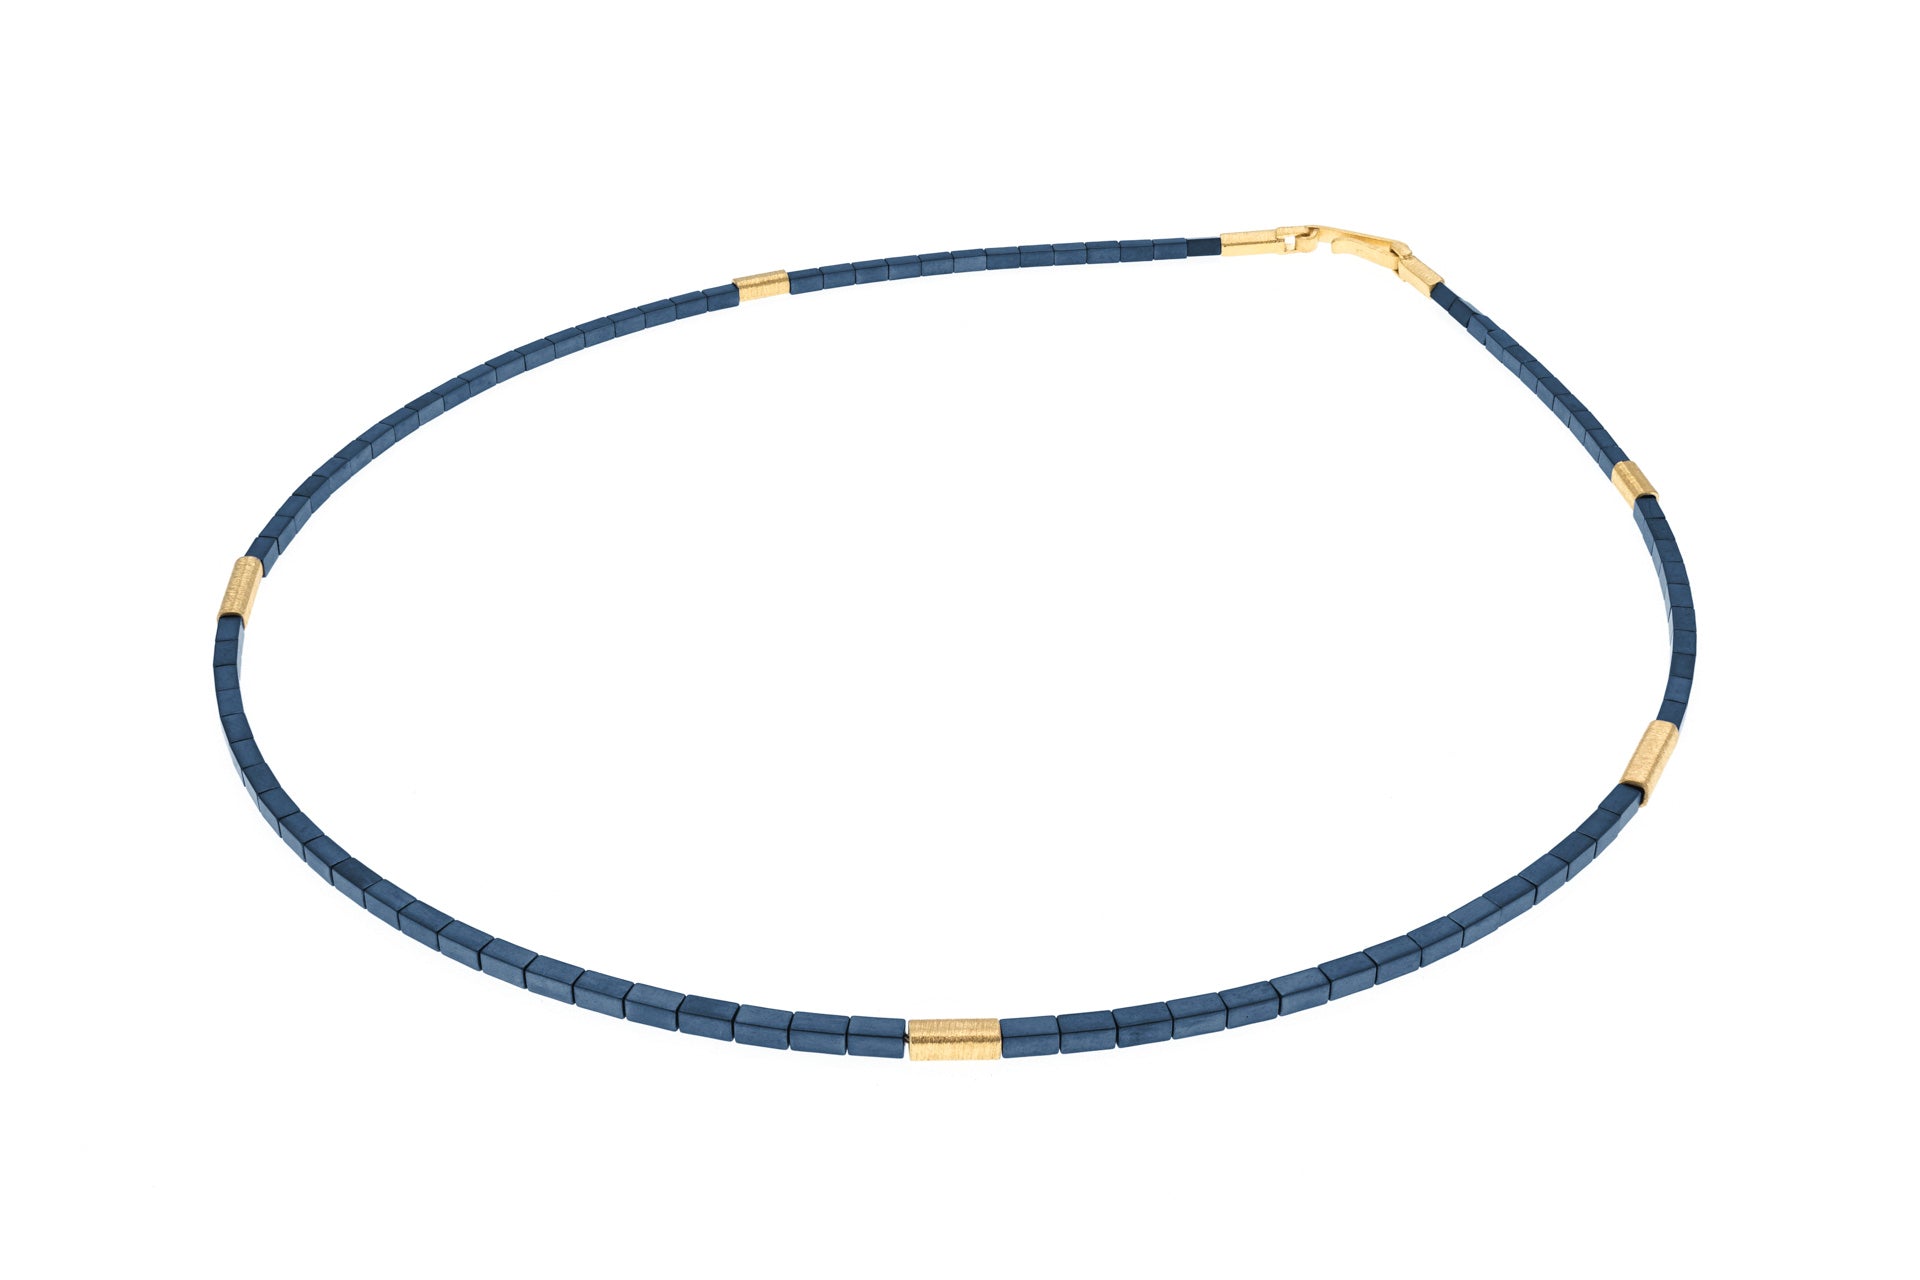 Gold & Blue Hematite Necklace - The Nancy Smillie Shop - Art, Jewellery & Designer Gifts Glasgow